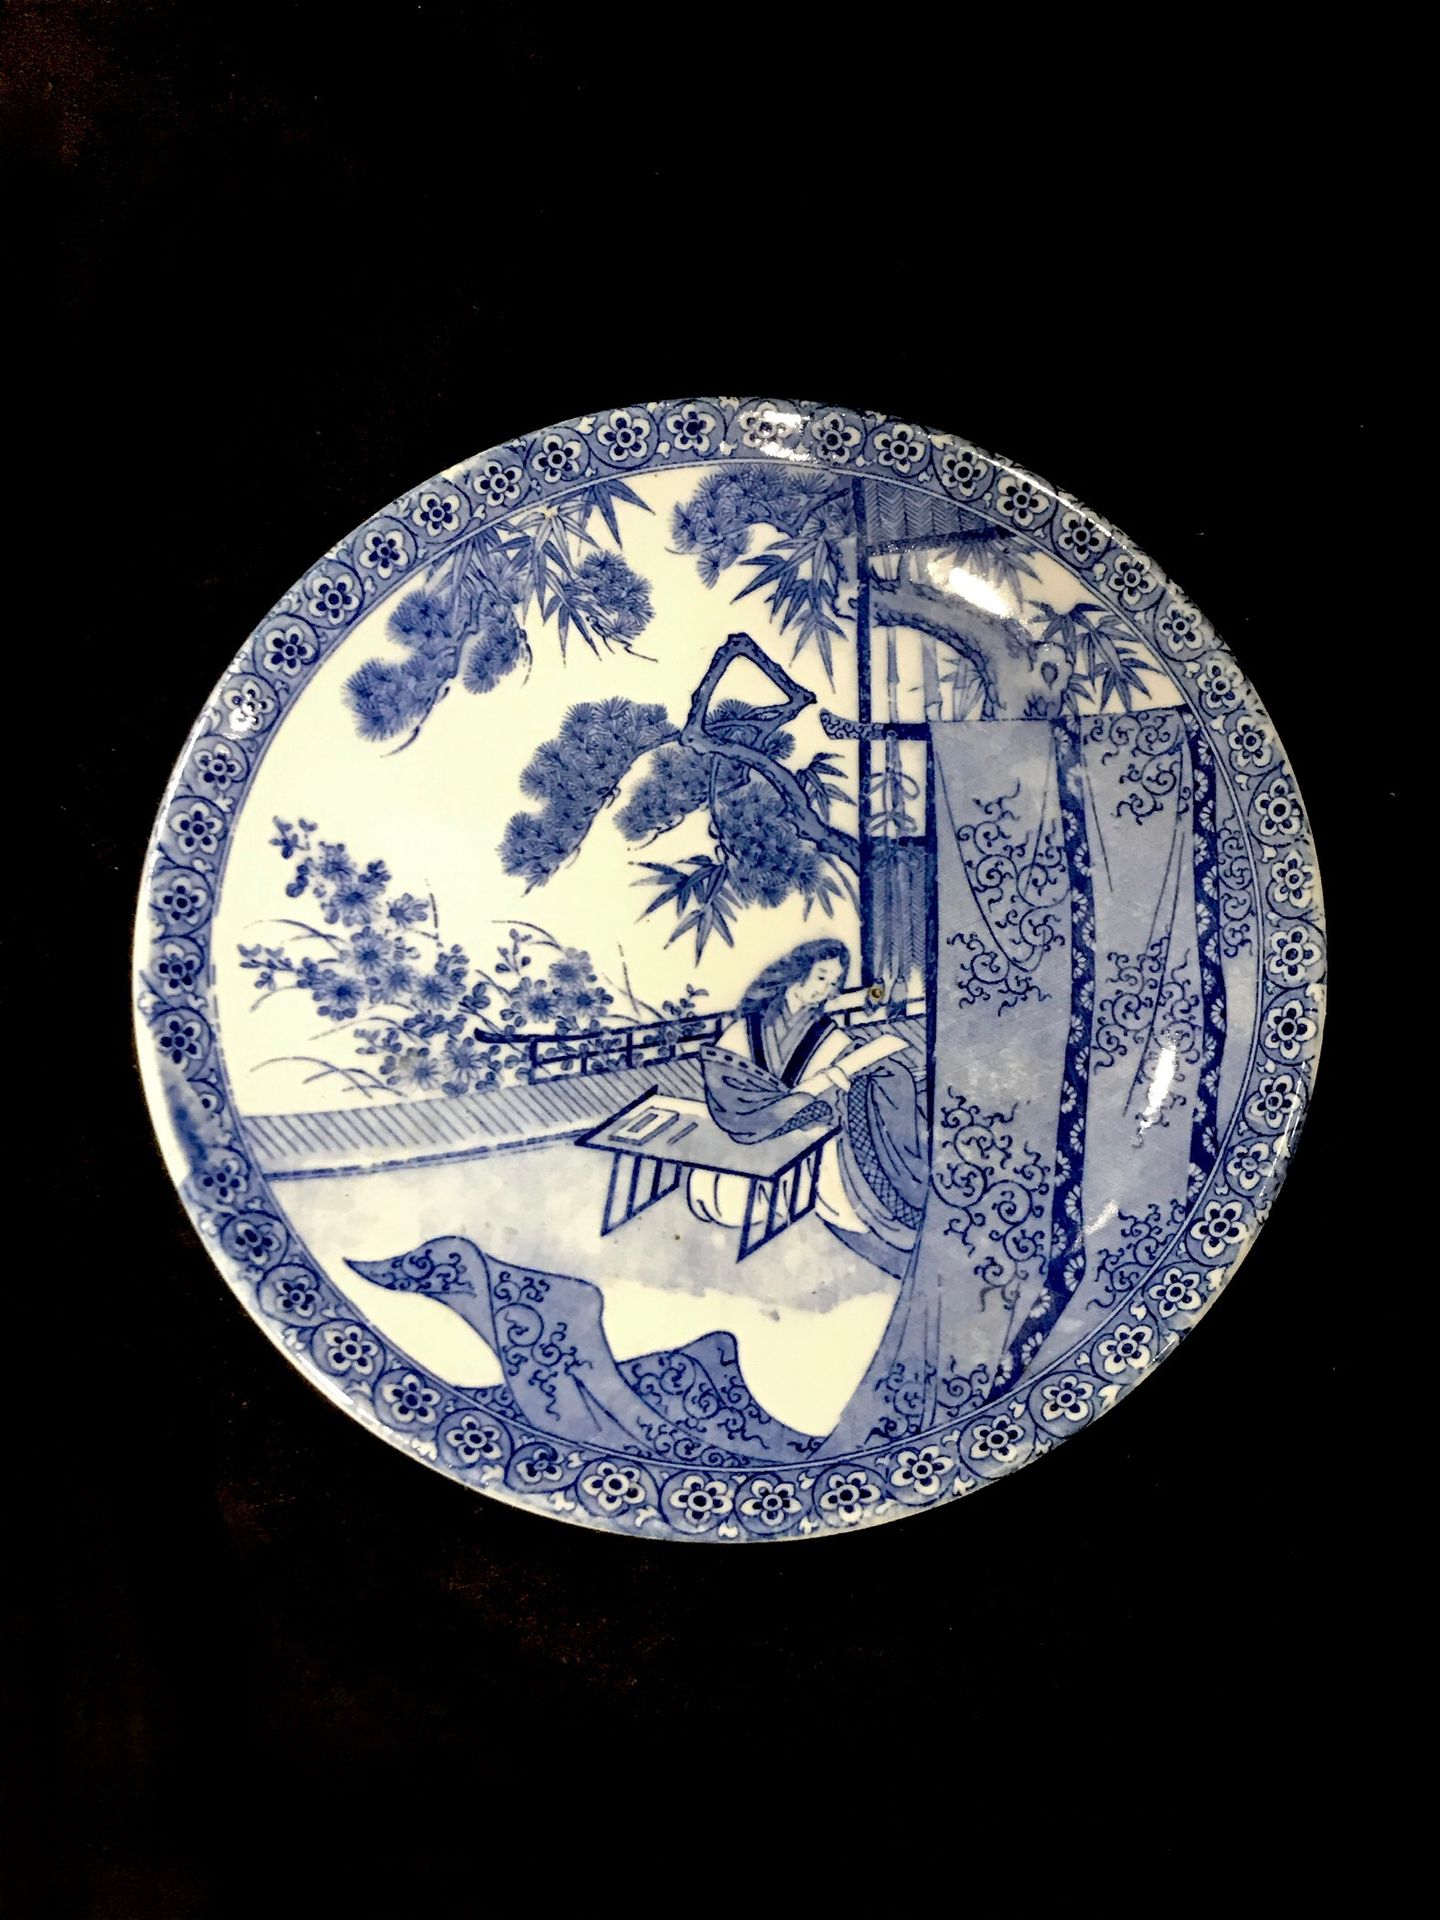 Null 日本，盘子上有蓝色的坐着的学者的装饰。直径31厘米。模板装饰